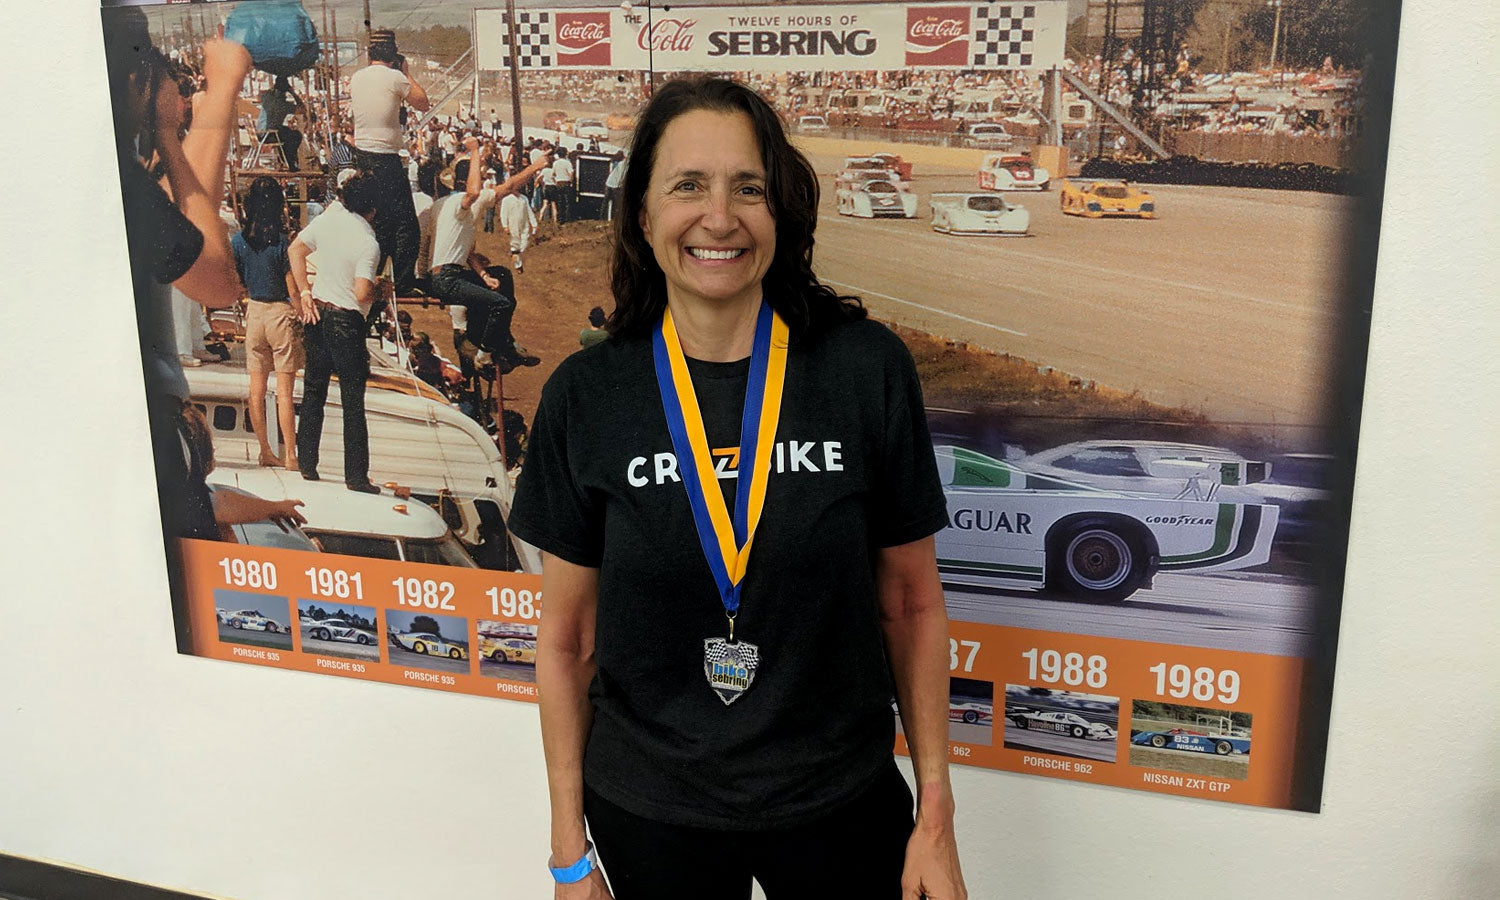 Maria Parker first female finisher Bike Sebring 2019 12-hour race